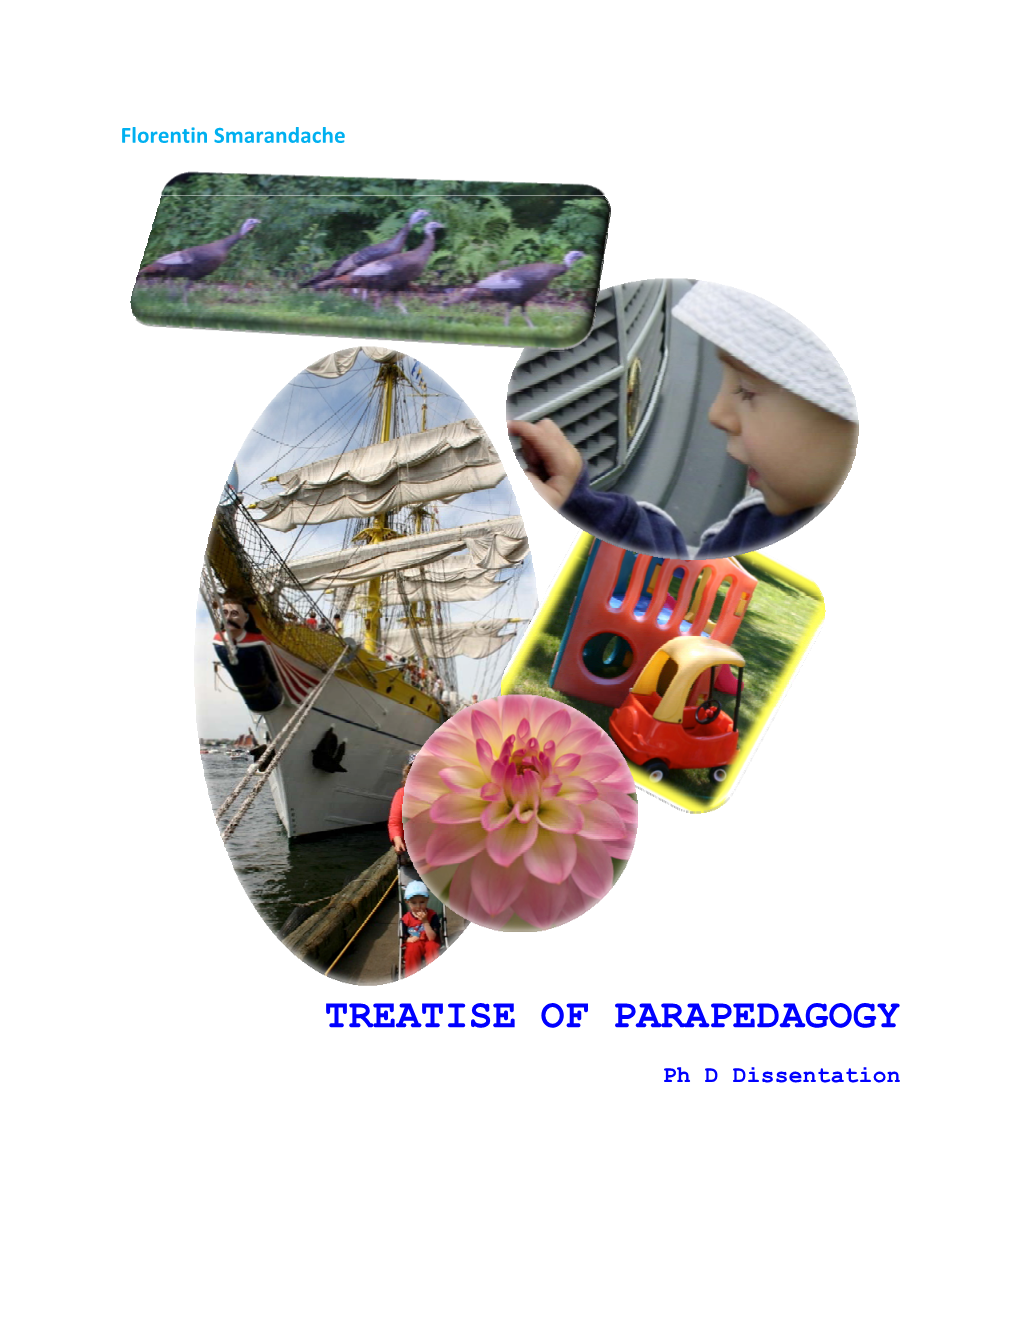 Treatise of Parapedagogy / Ph D Dissentation